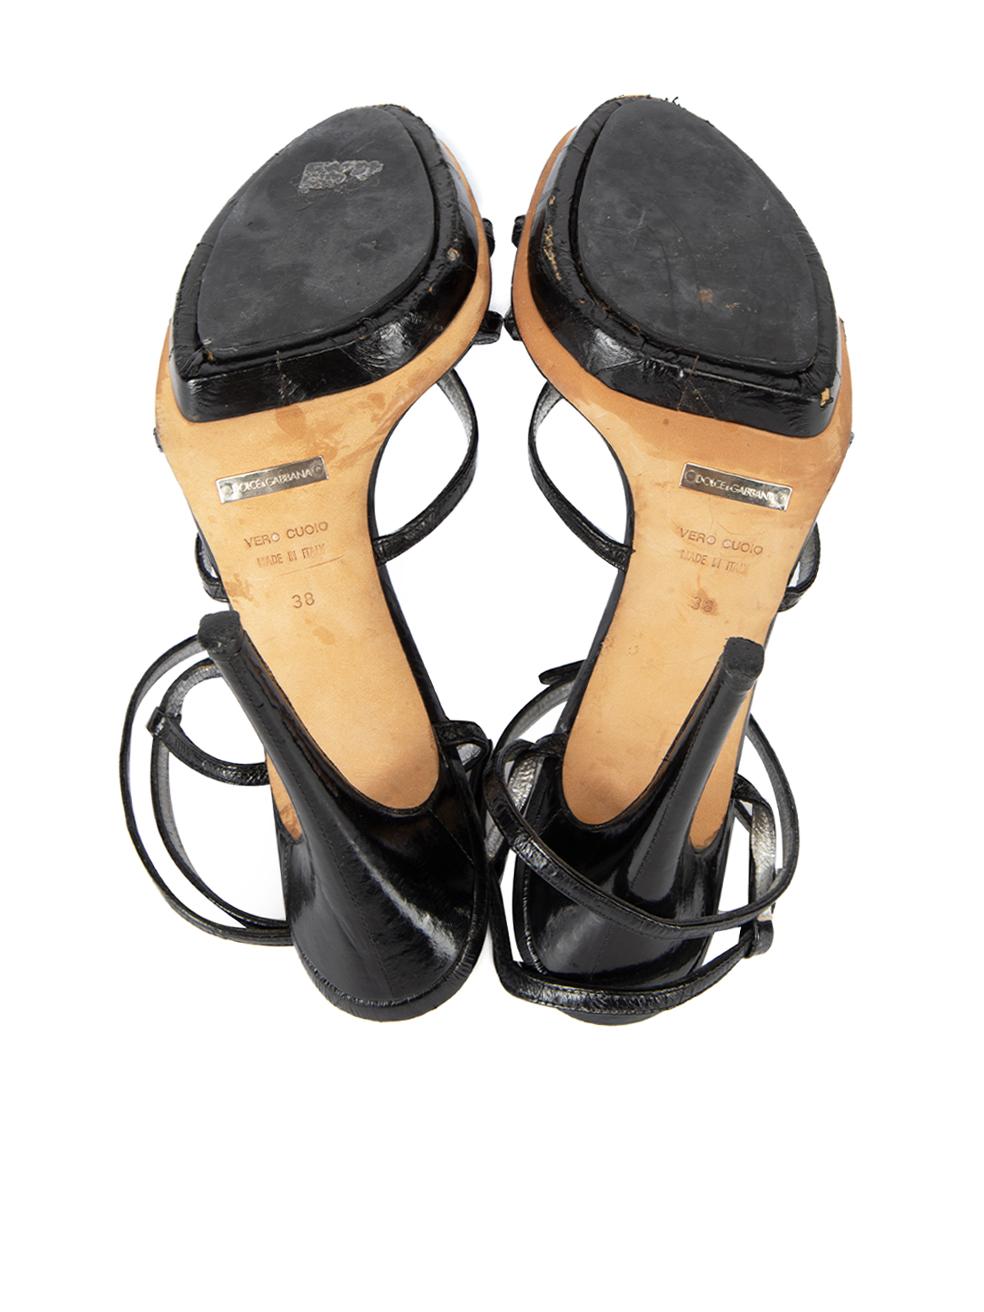 Dolce & Gabbana Women's Black Eel Leather Strappy Sandal Heel For Sale 2